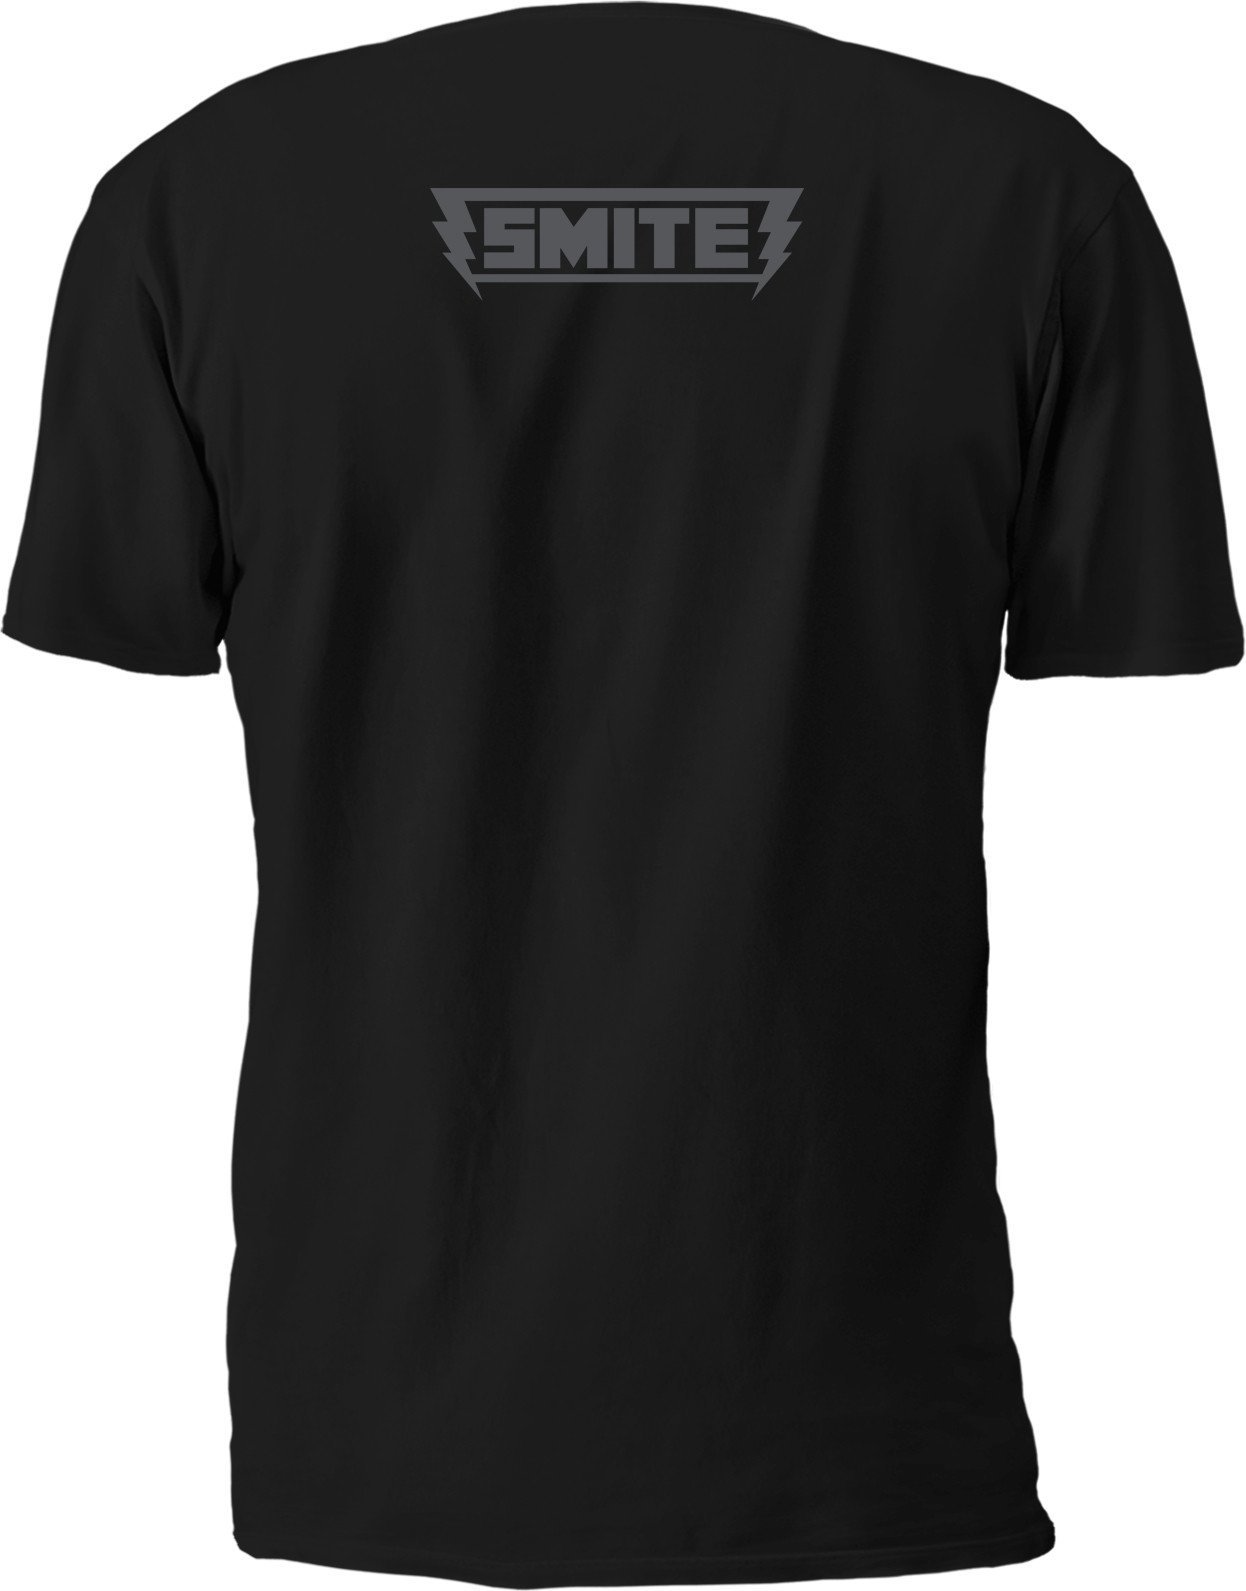 Smite Gods: Bellona T-shirt